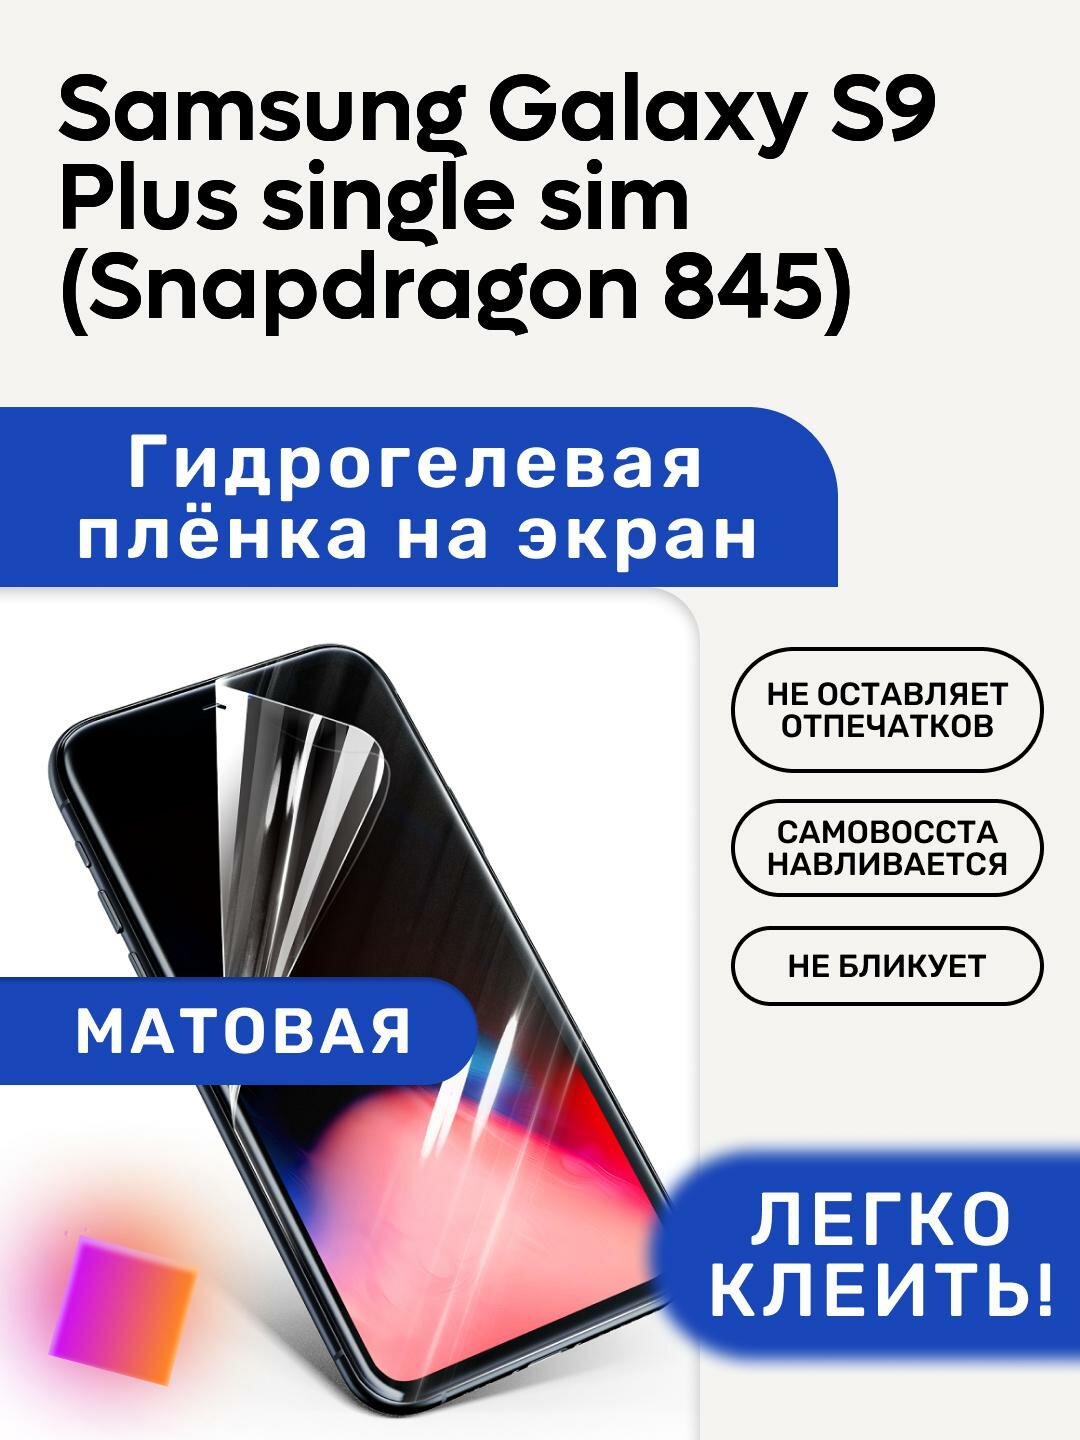 Матовая Гидрогелевая плёнка, полиуретановая, защита экрана Samsung Galaxy S9 Plus single sim (Snapdragon 845)